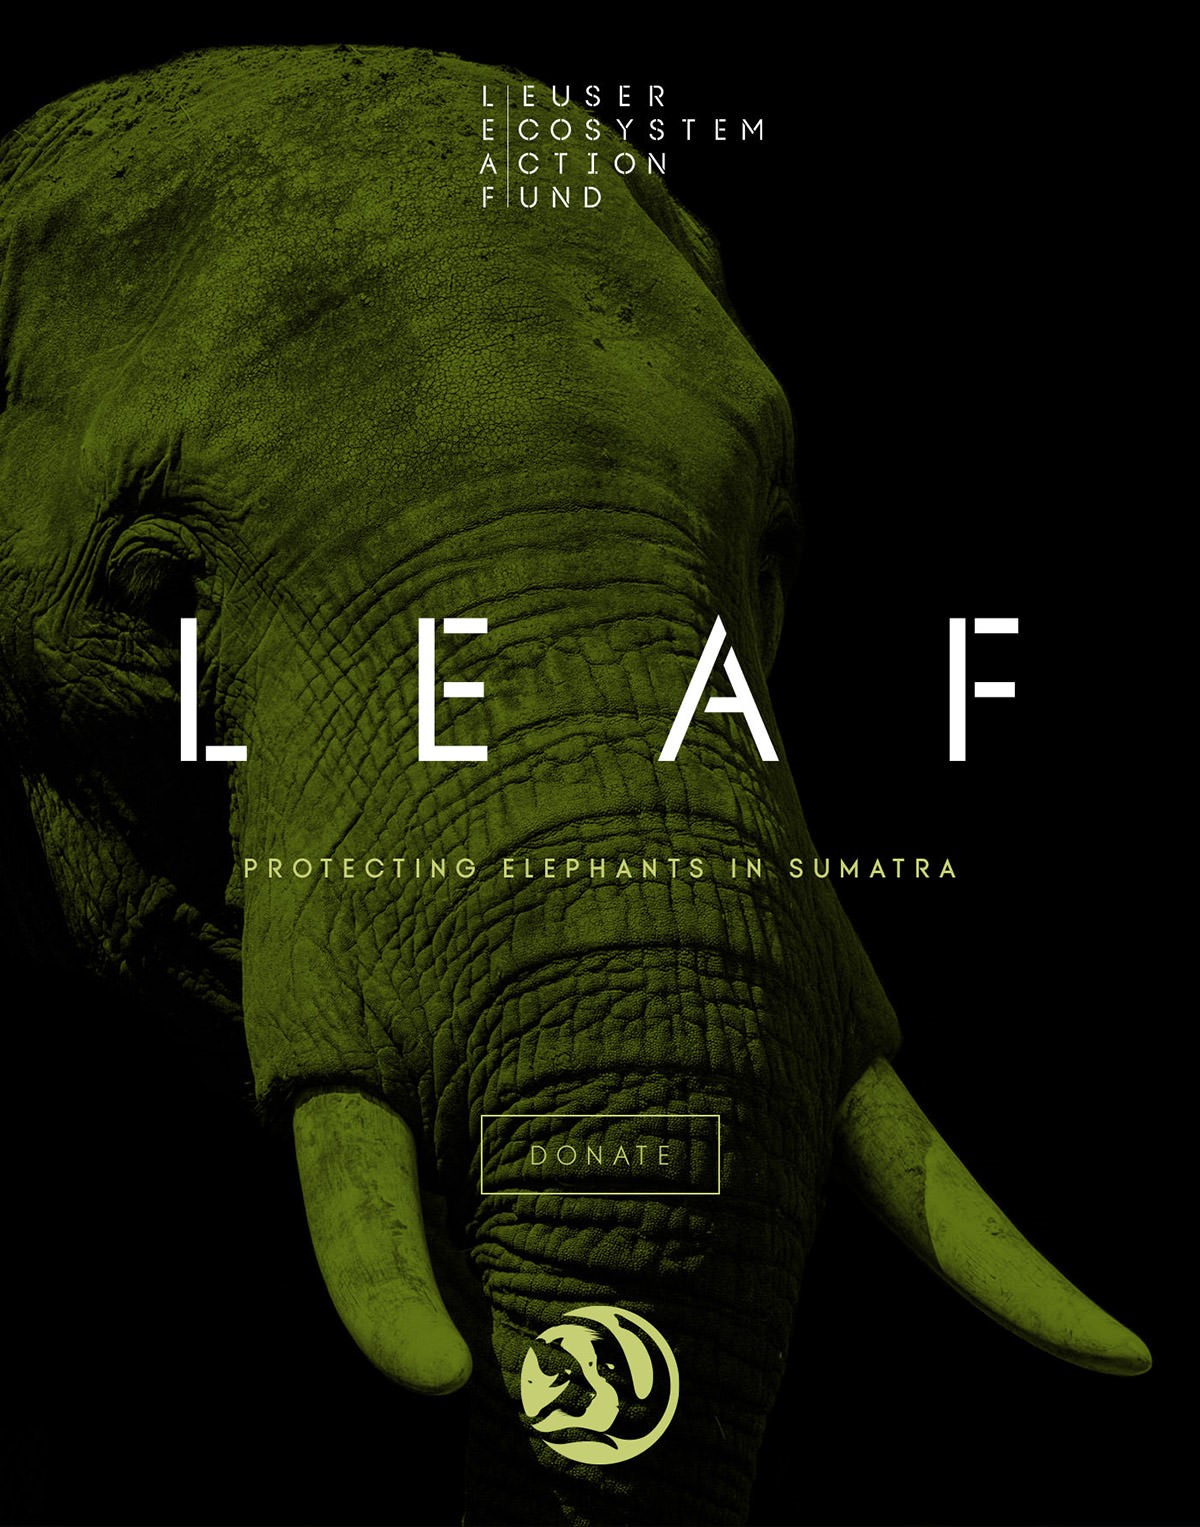 Leuser Ecosystem Action Fund [LEAF] elephant donation request advert. Client: DiCaprio foundation + Sumatran Orangutan Society [SOS].